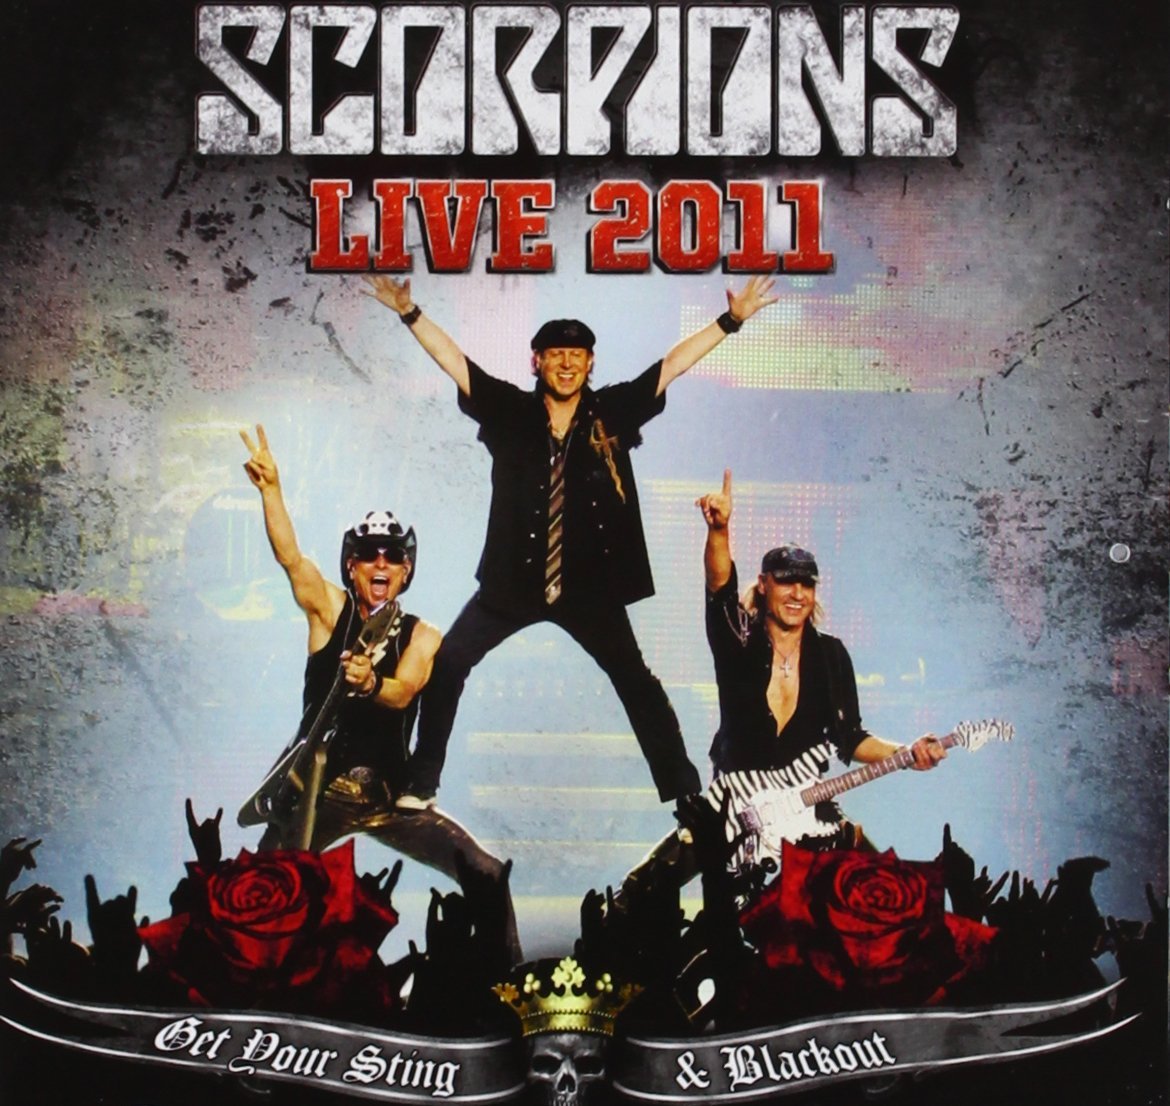 Justin Bieber Song and Music Free Download: Scorpions - Discografia Completa (MEGA)